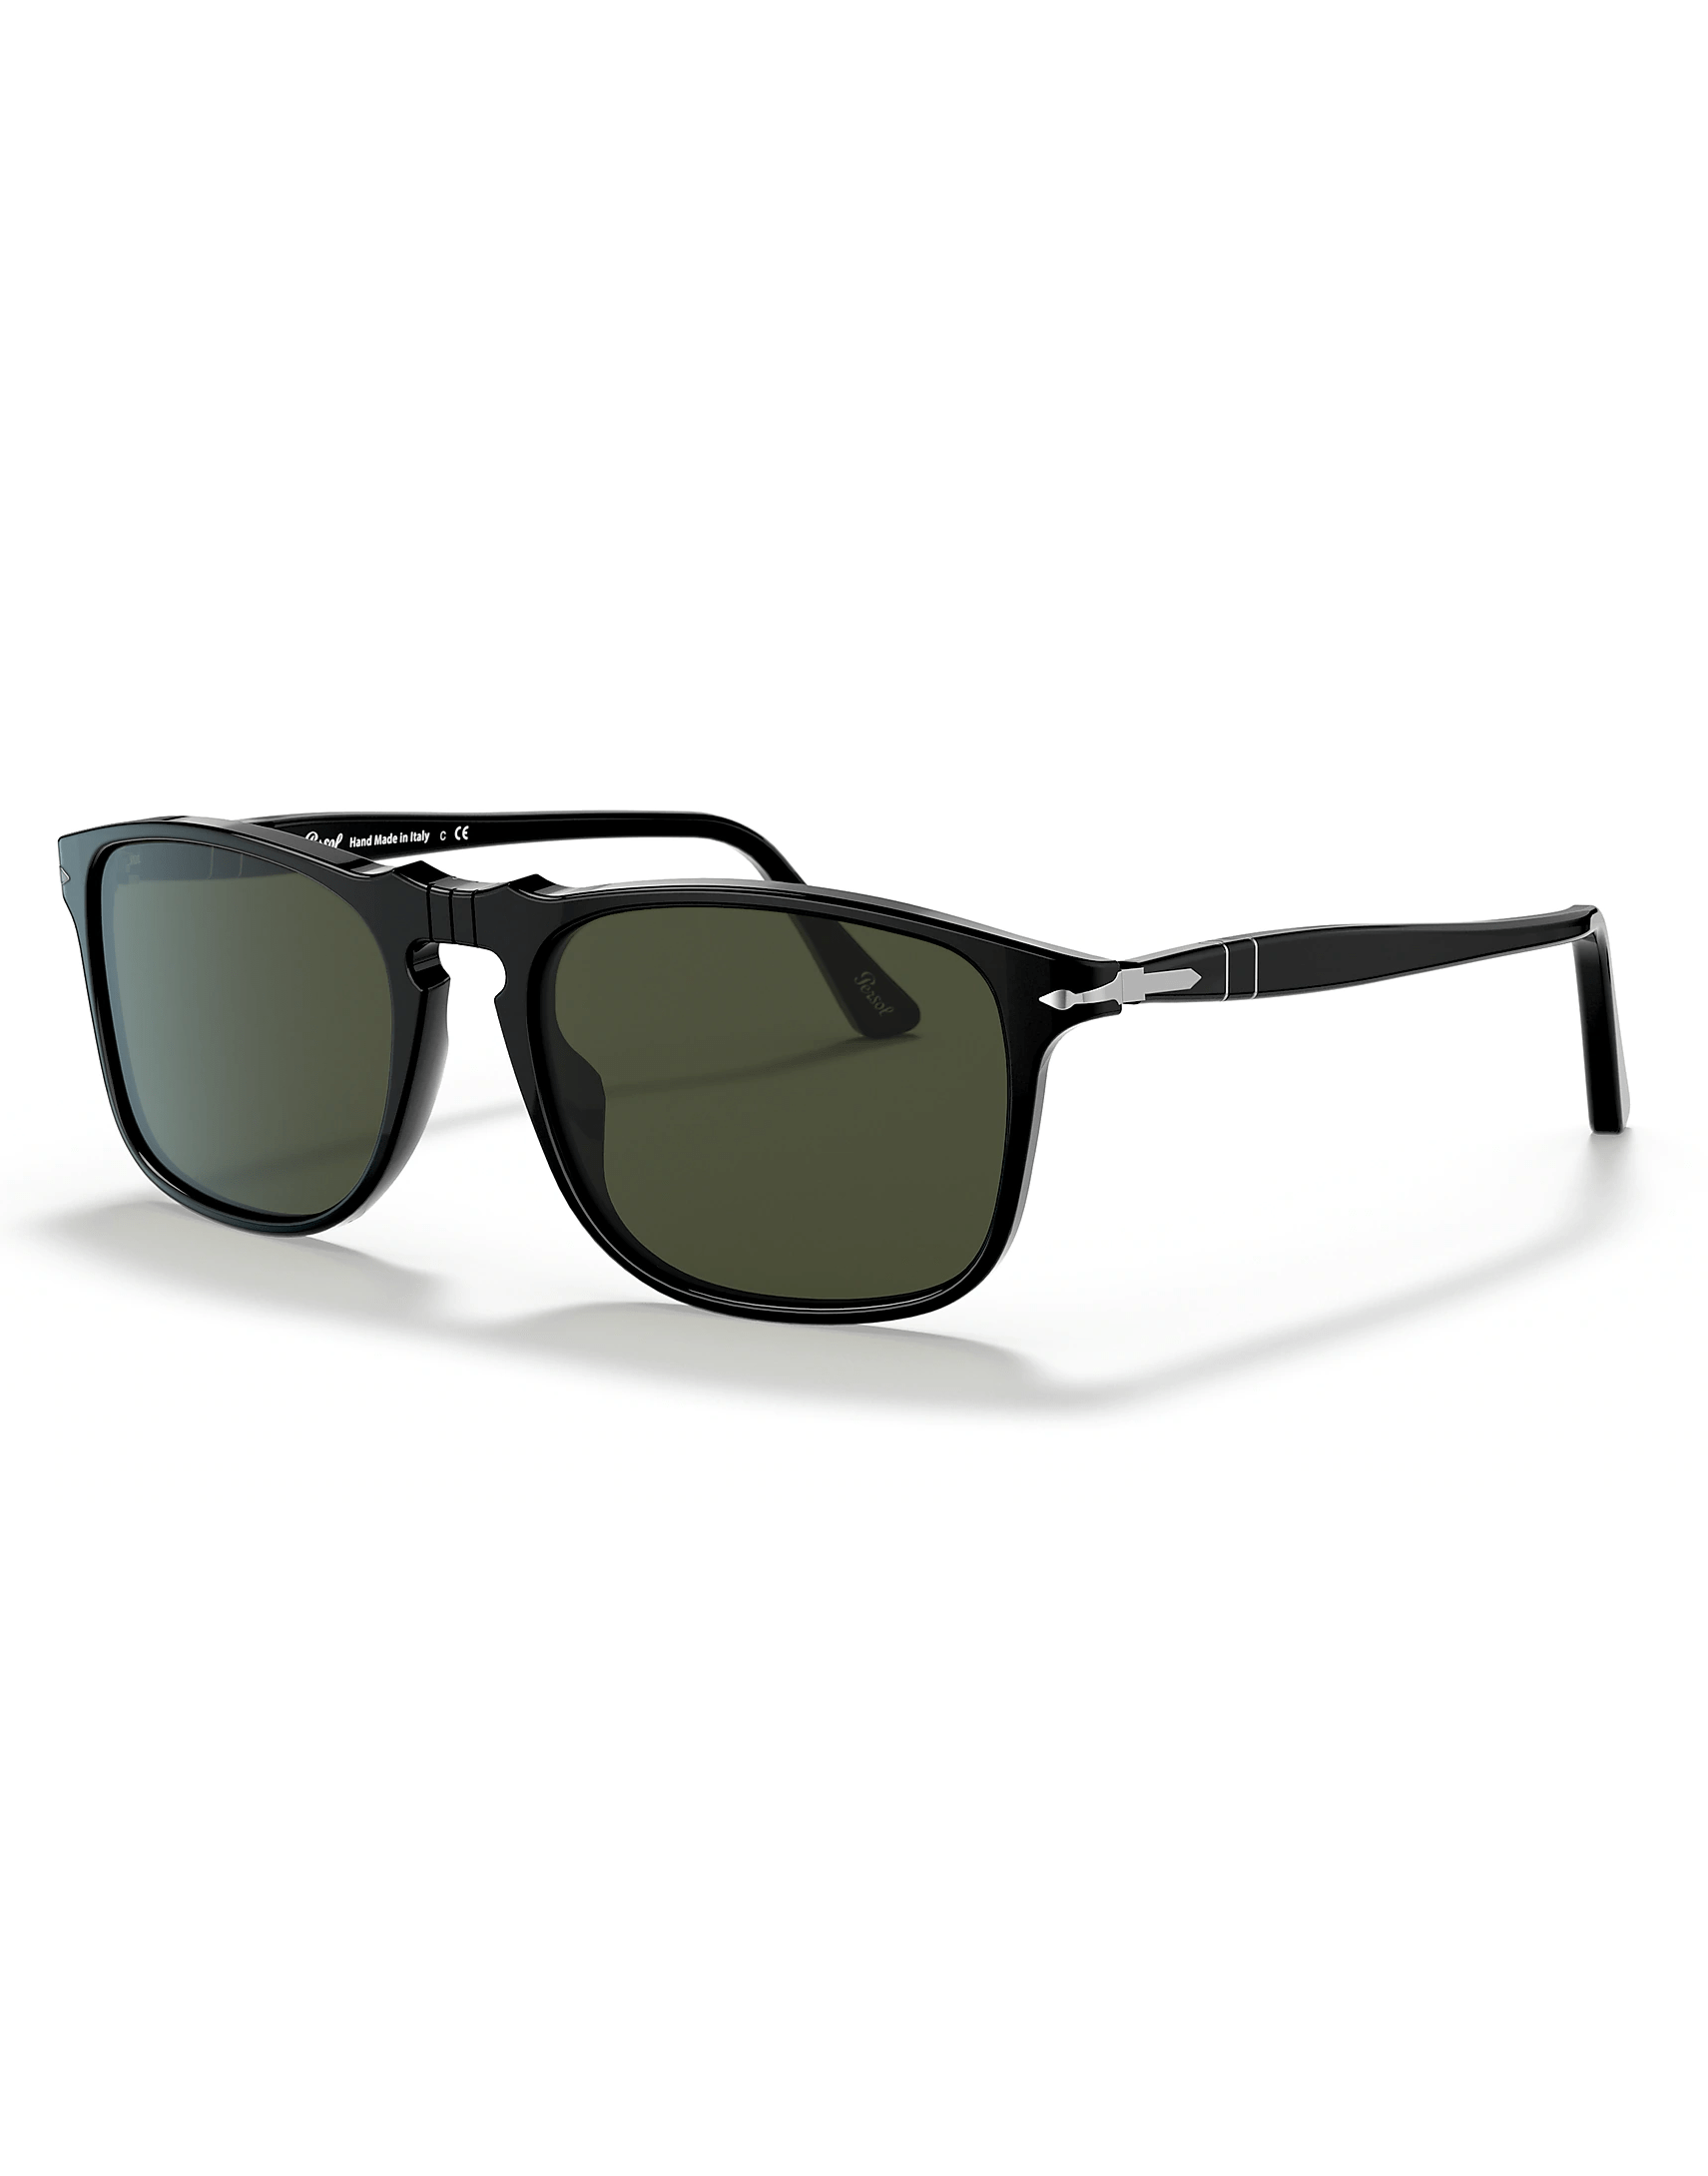 PERSOL-Green Acetate Sunglasses-BLK/GRN